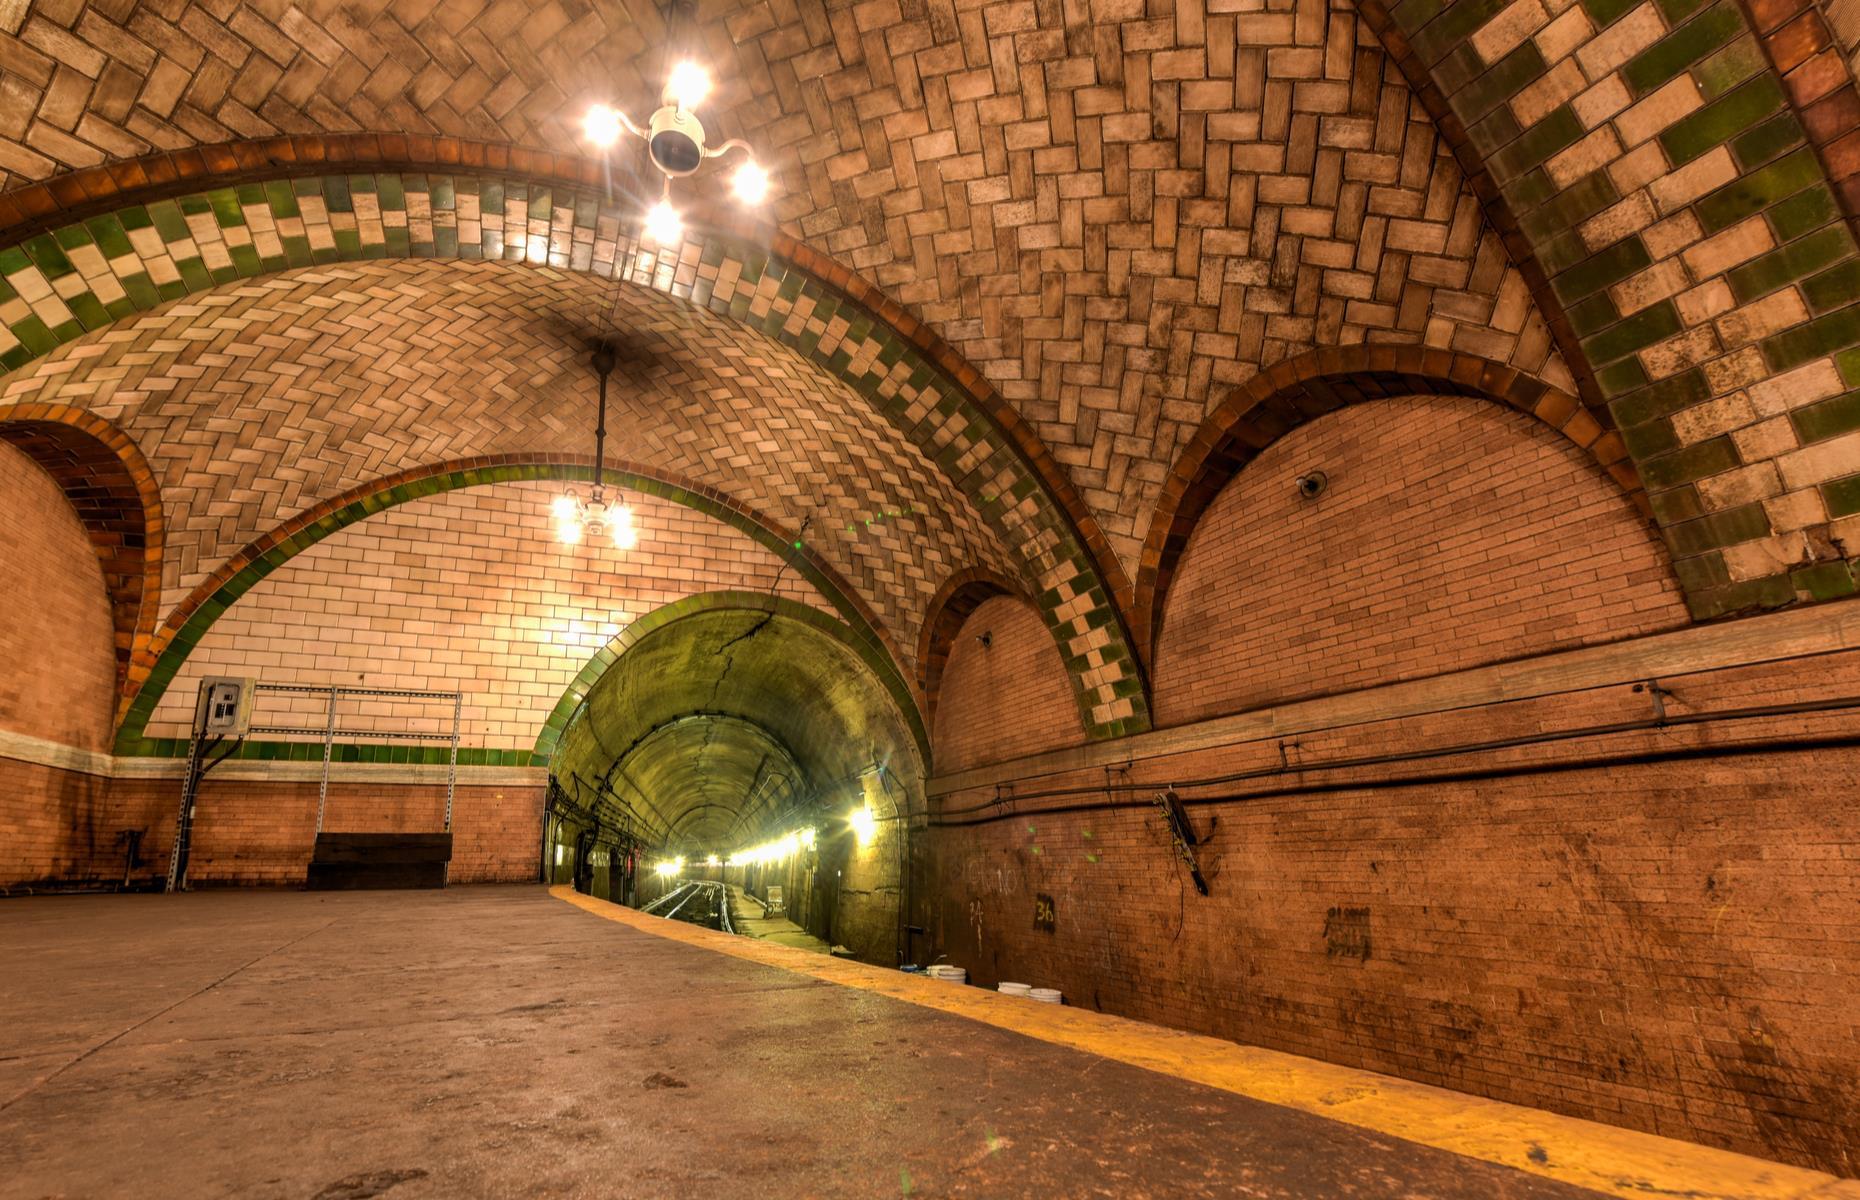 A stunning Art Deco subway station, USA